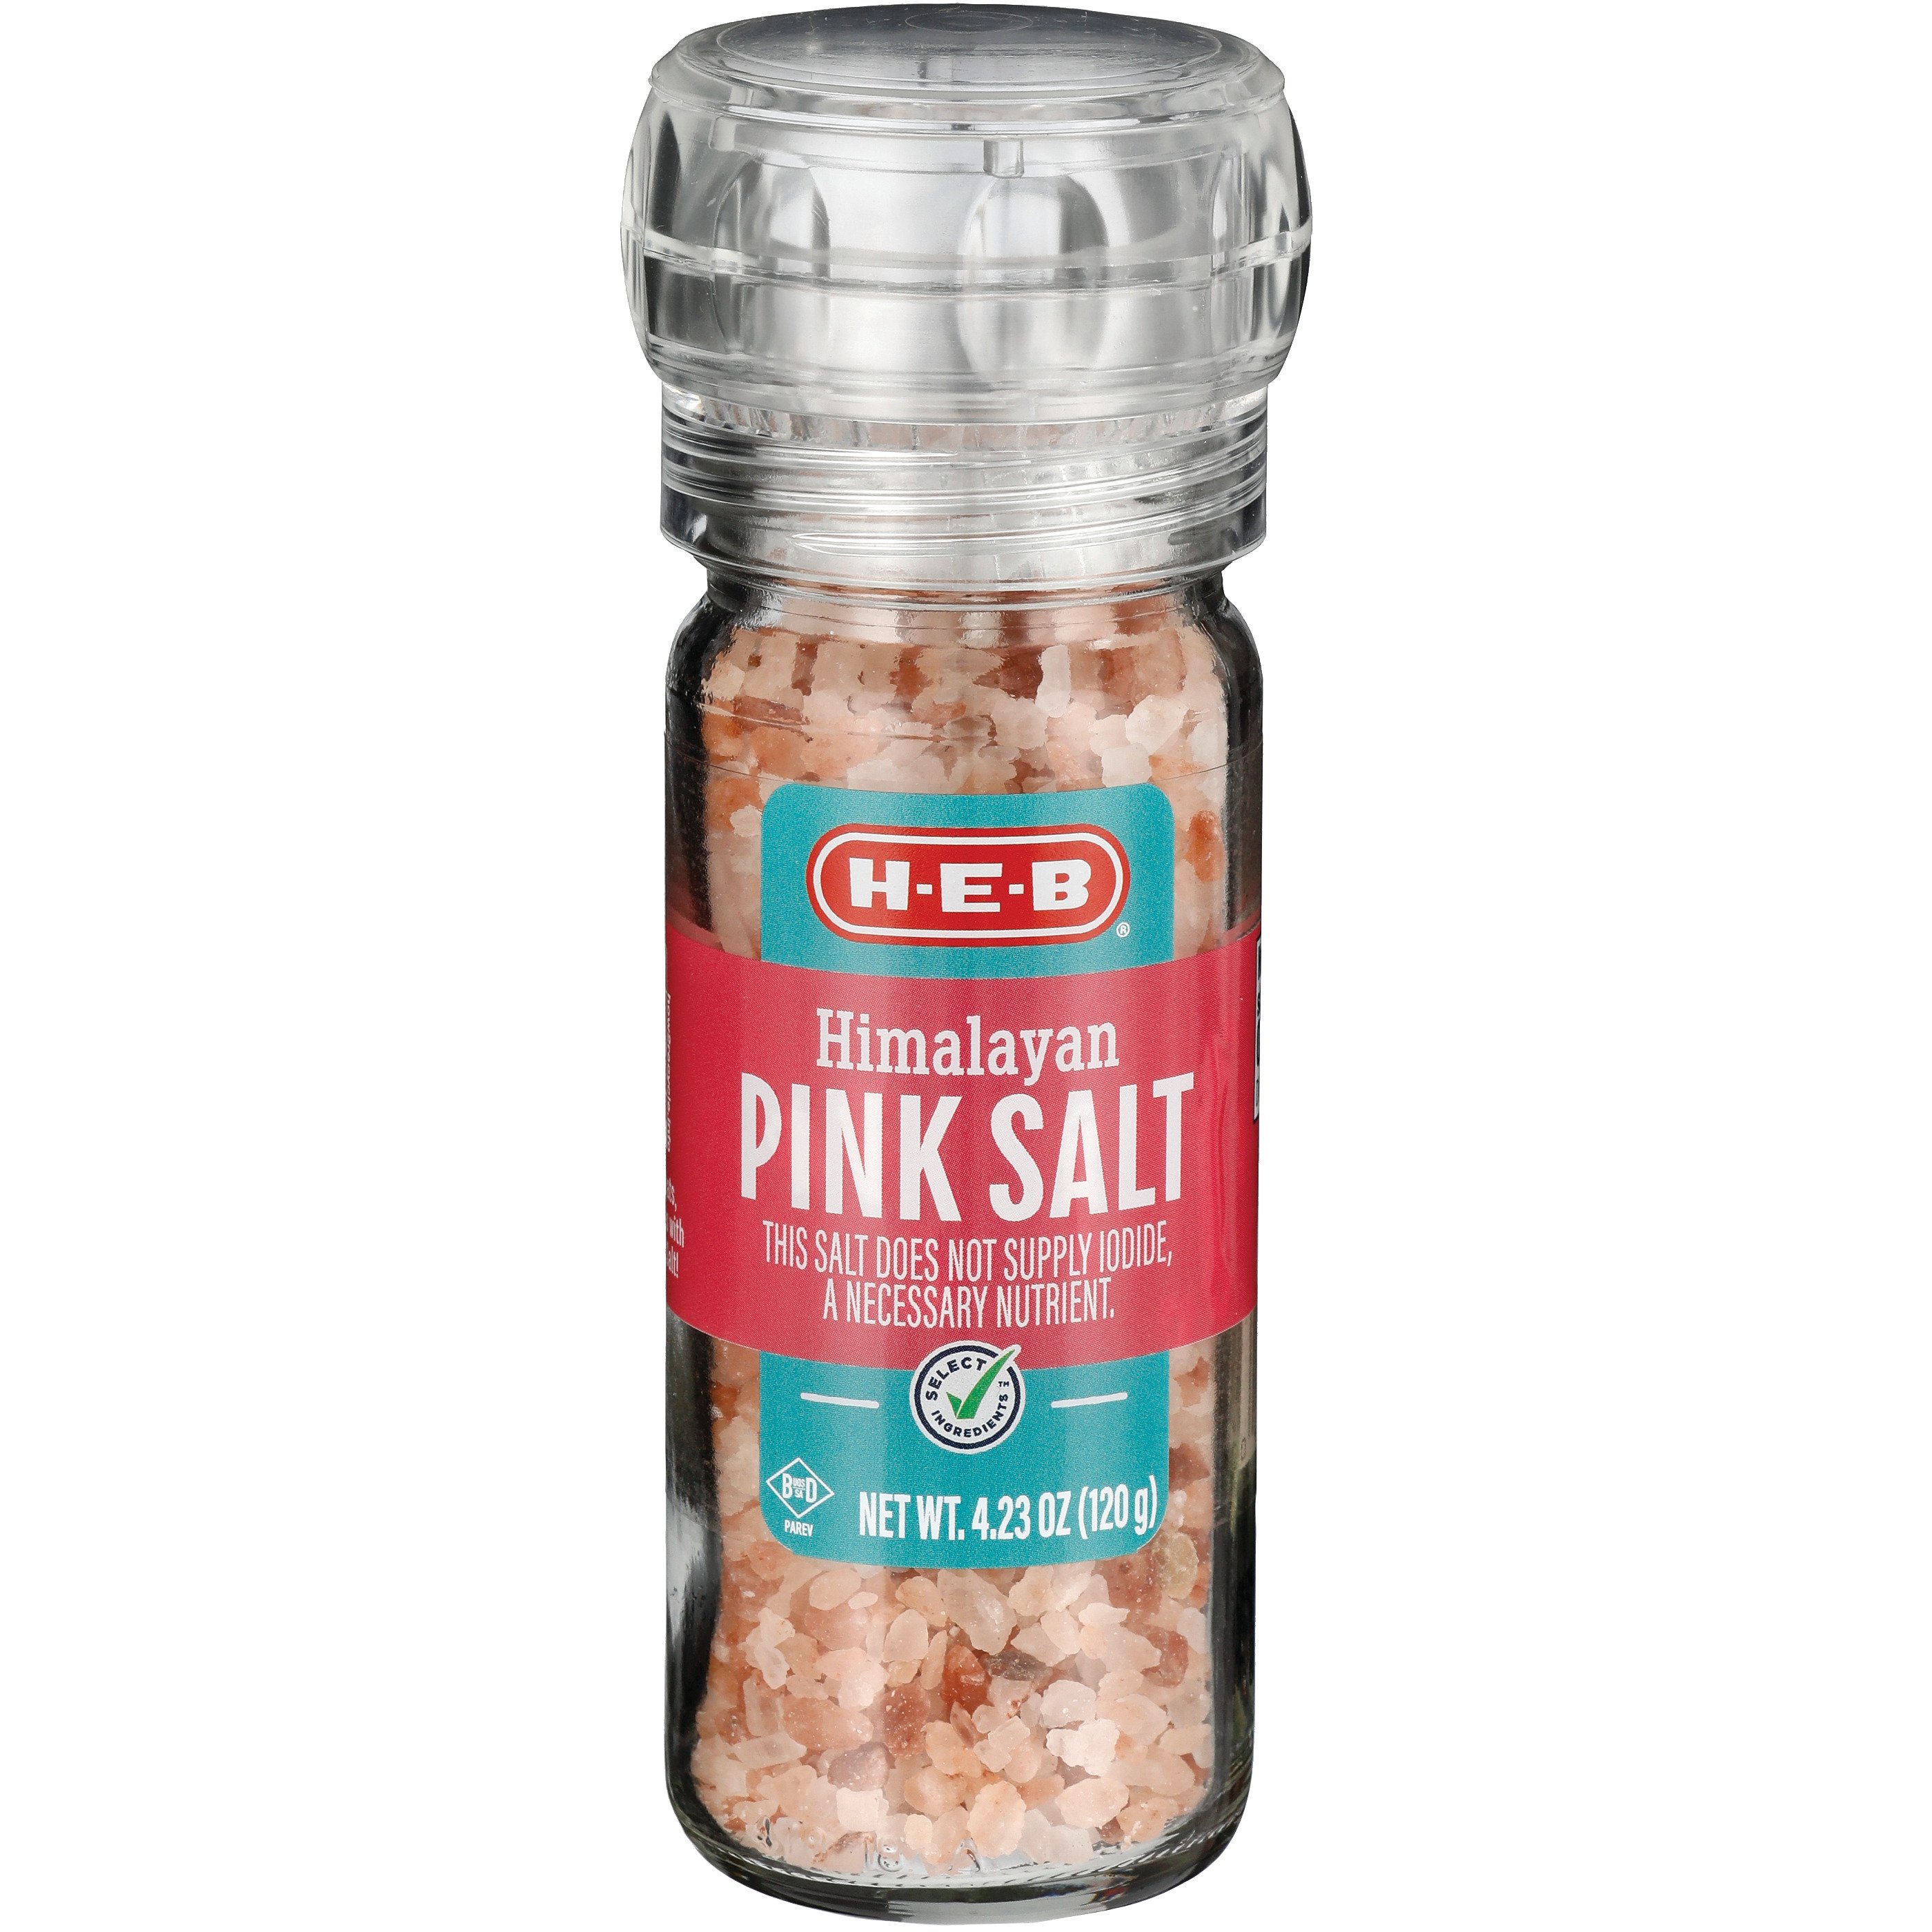 Jacobsen Salt Co. Jacobsen Salt Co. Pink Himalayan Refill